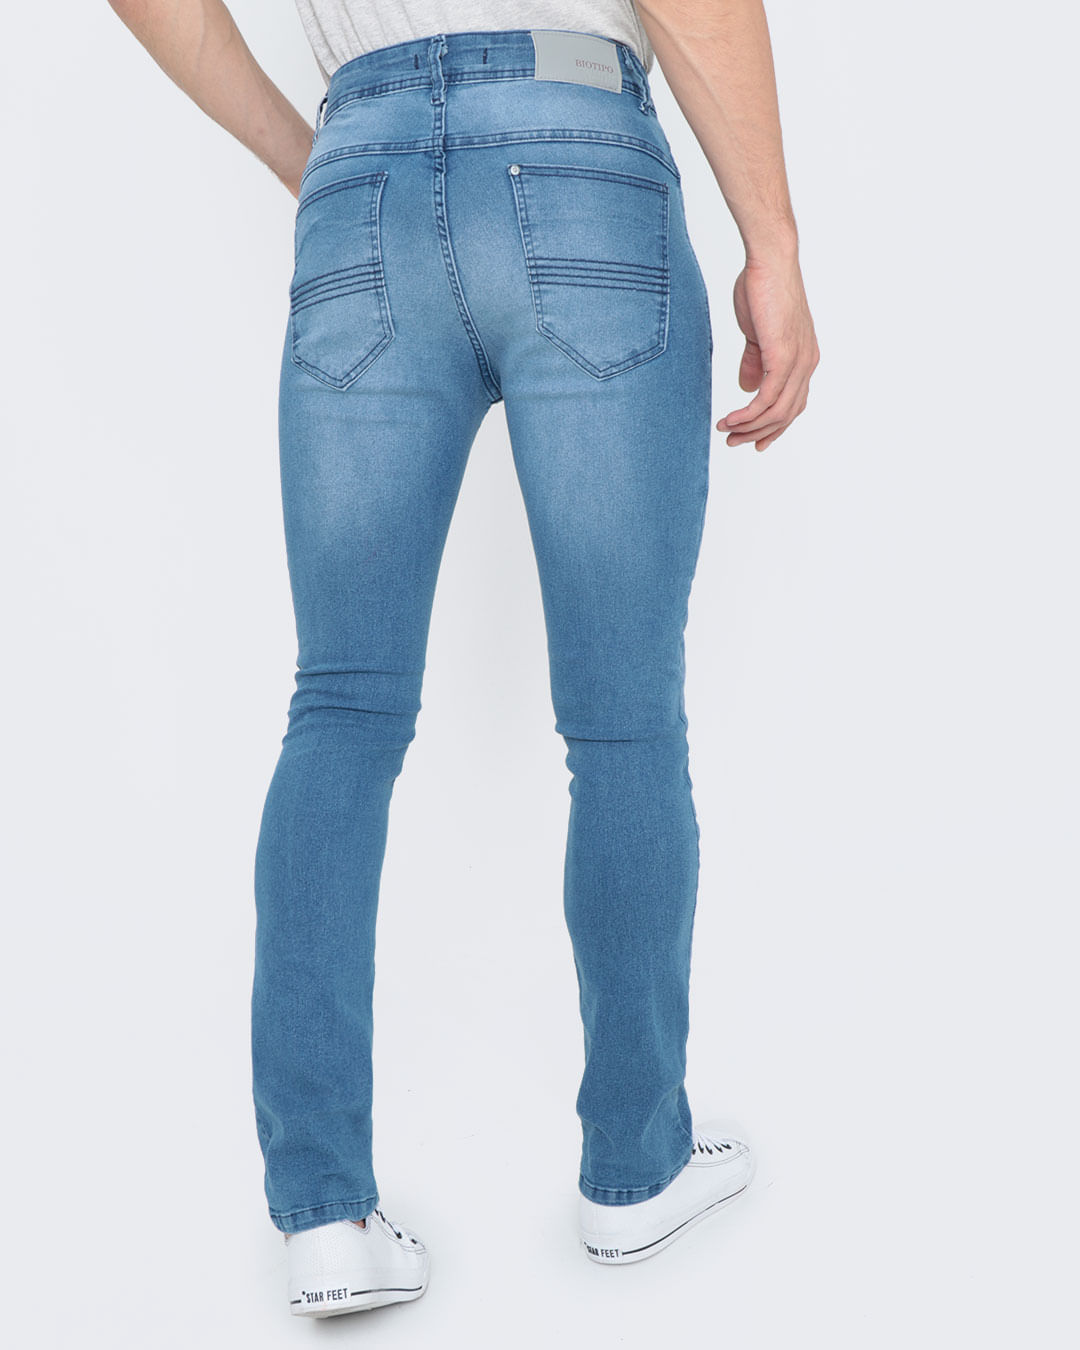 Calca-Masculina-Slim-Biotipo-Jeans-Azul